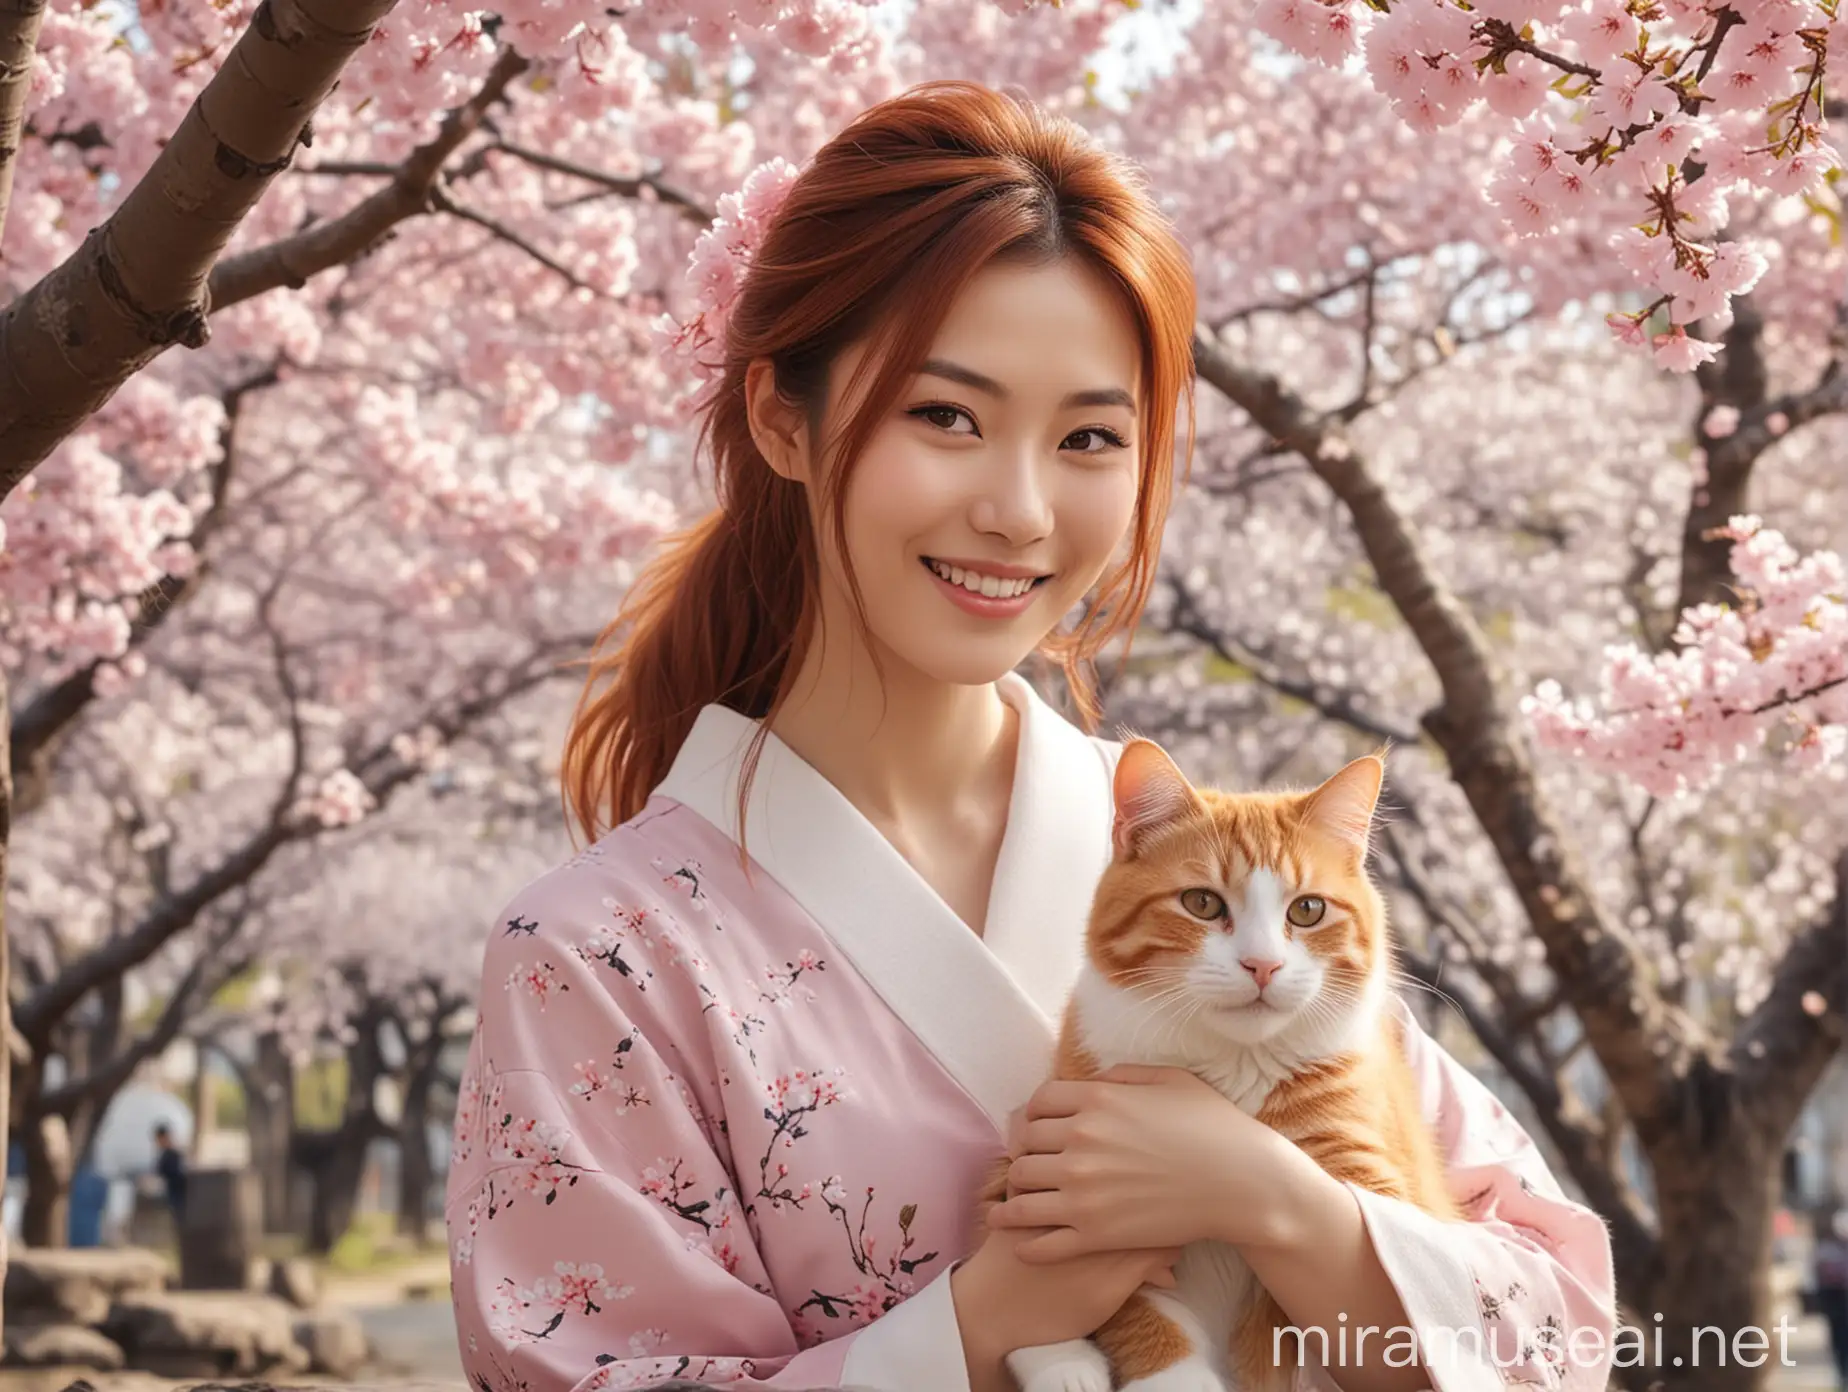 Very beautiful japanese woman, smiling, enjoy playing with cute ginger cat under sakura tree, sakura season, hyper realistic 4k photo